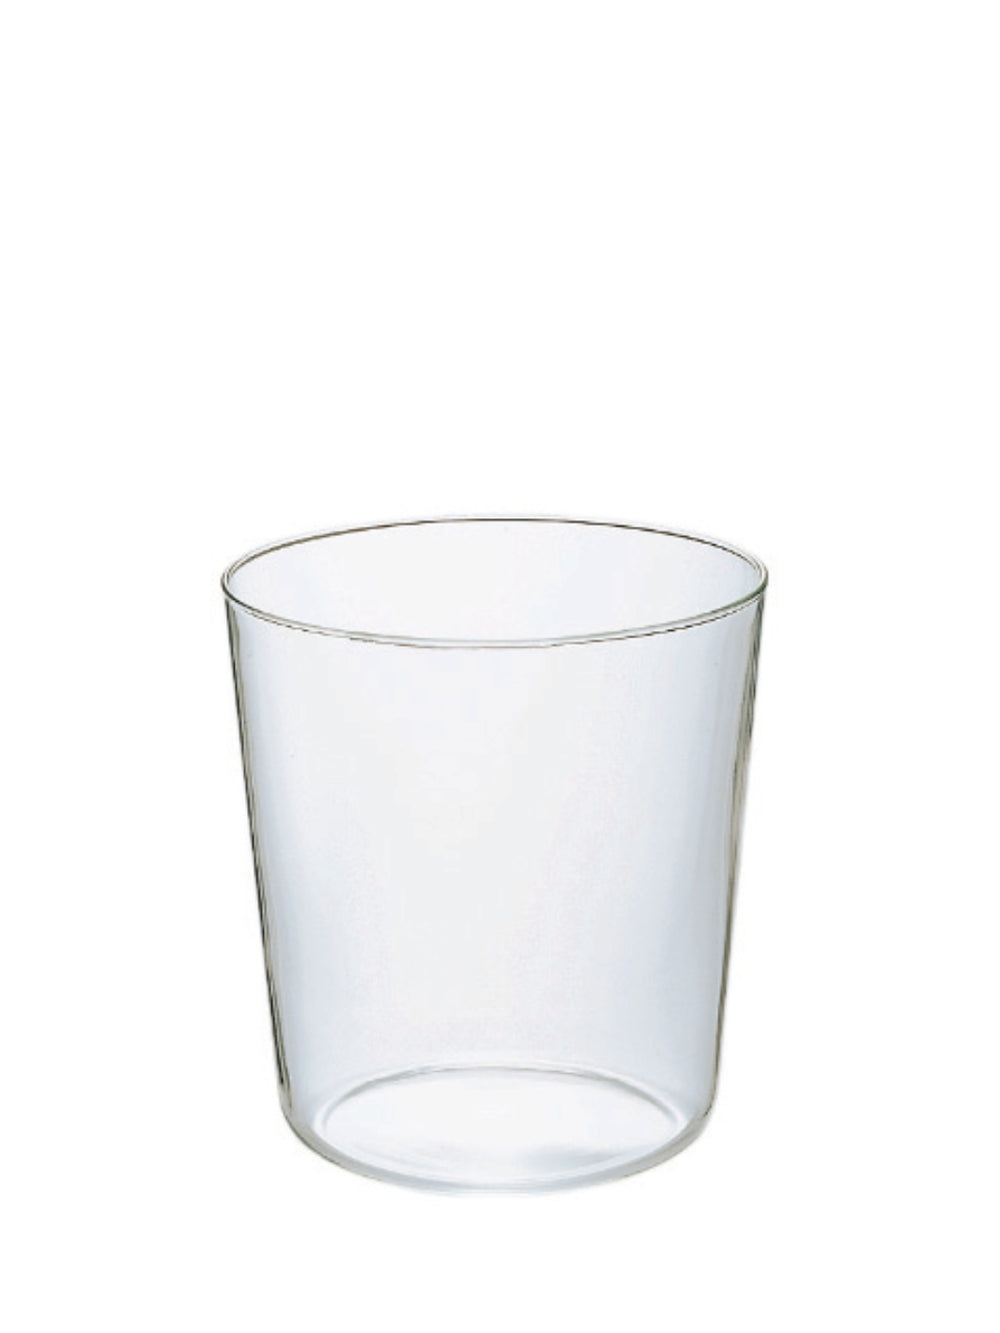 HARIO Shot Glass (80ml/3oz) – Someware